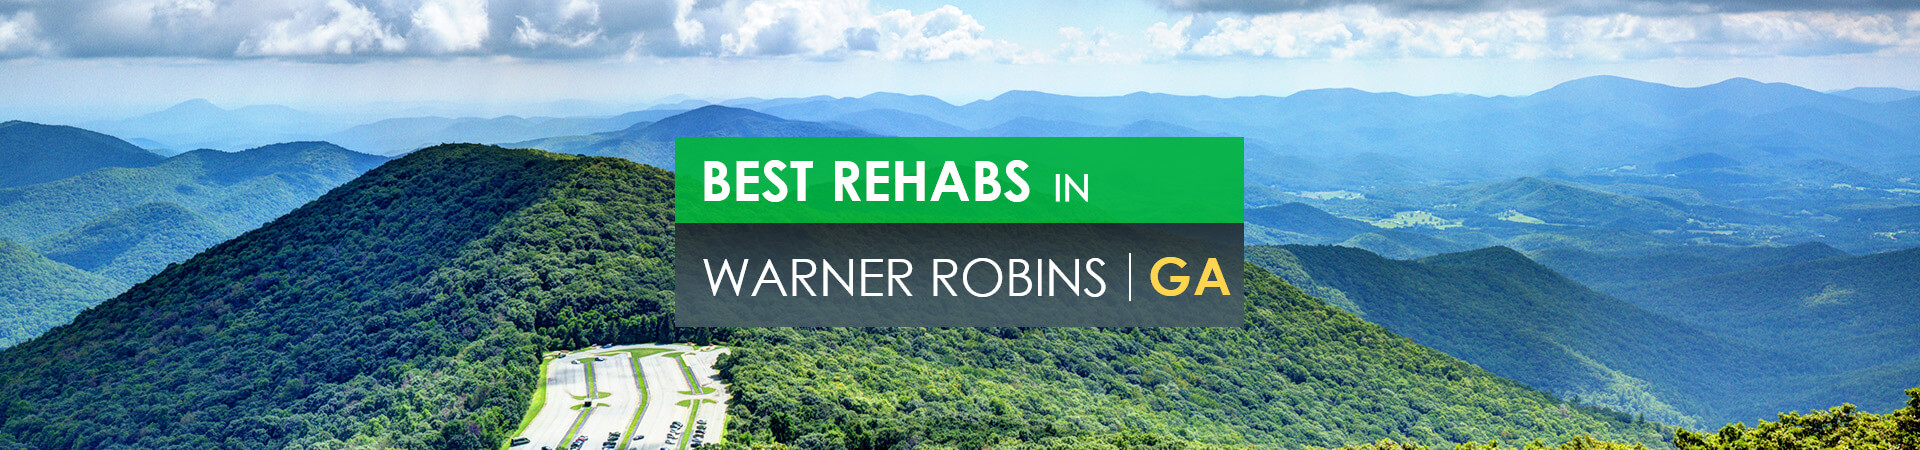 Best rehabs in Warner Robins, GA